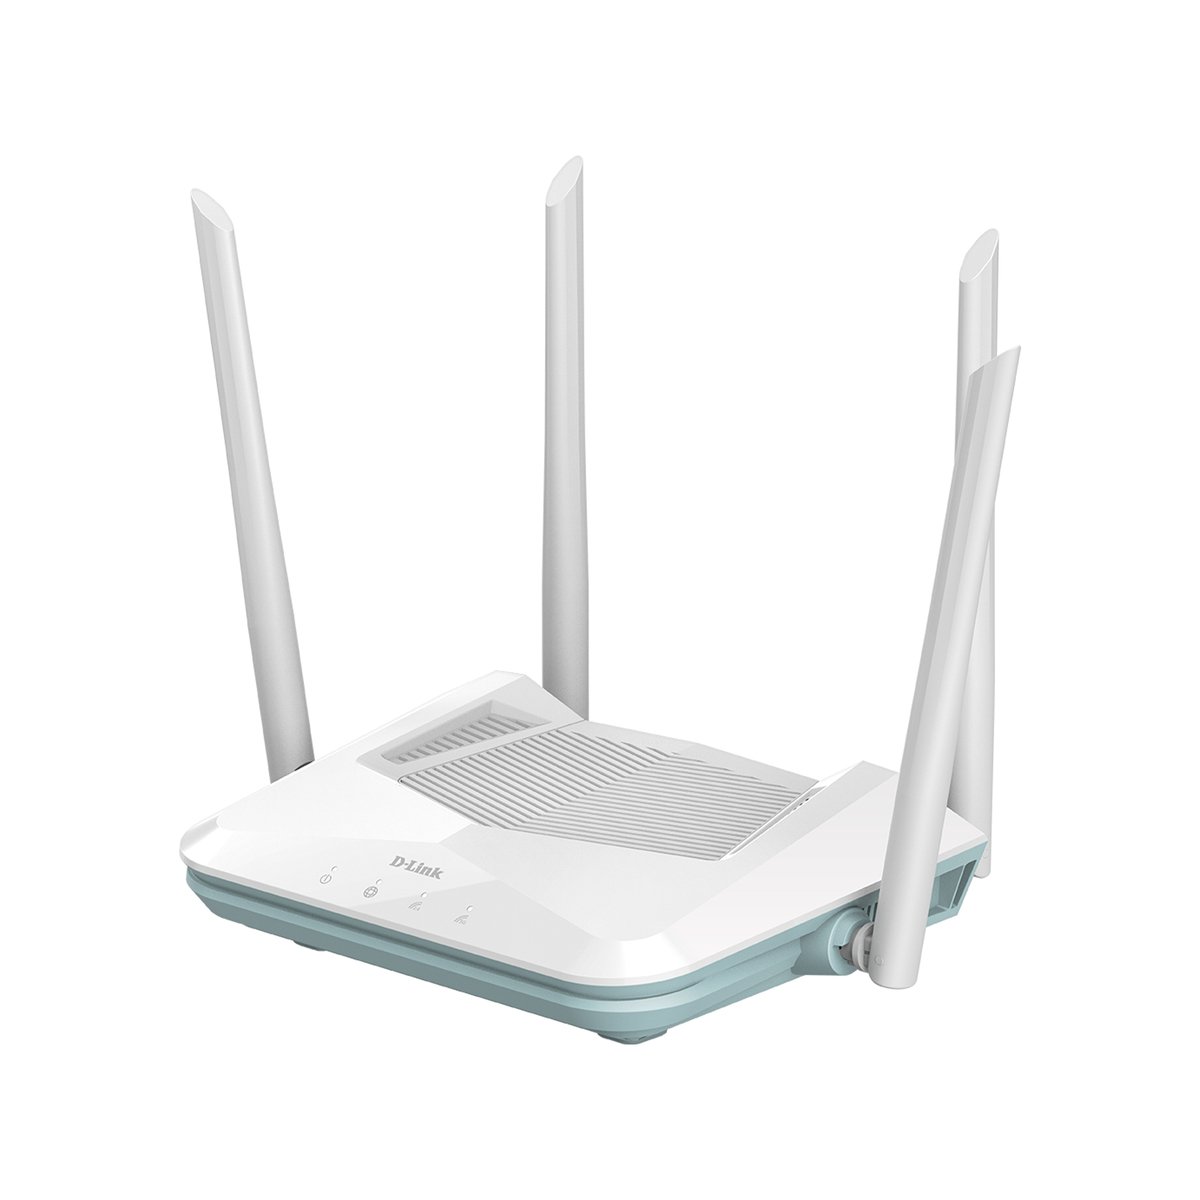 D-Link R15 AX 1500 Wi-Fi 6 AI Router, 4 Gigabit Ports, 4 External Antenna, Voice Control, Parental Control, D-Link Mesh Support, White